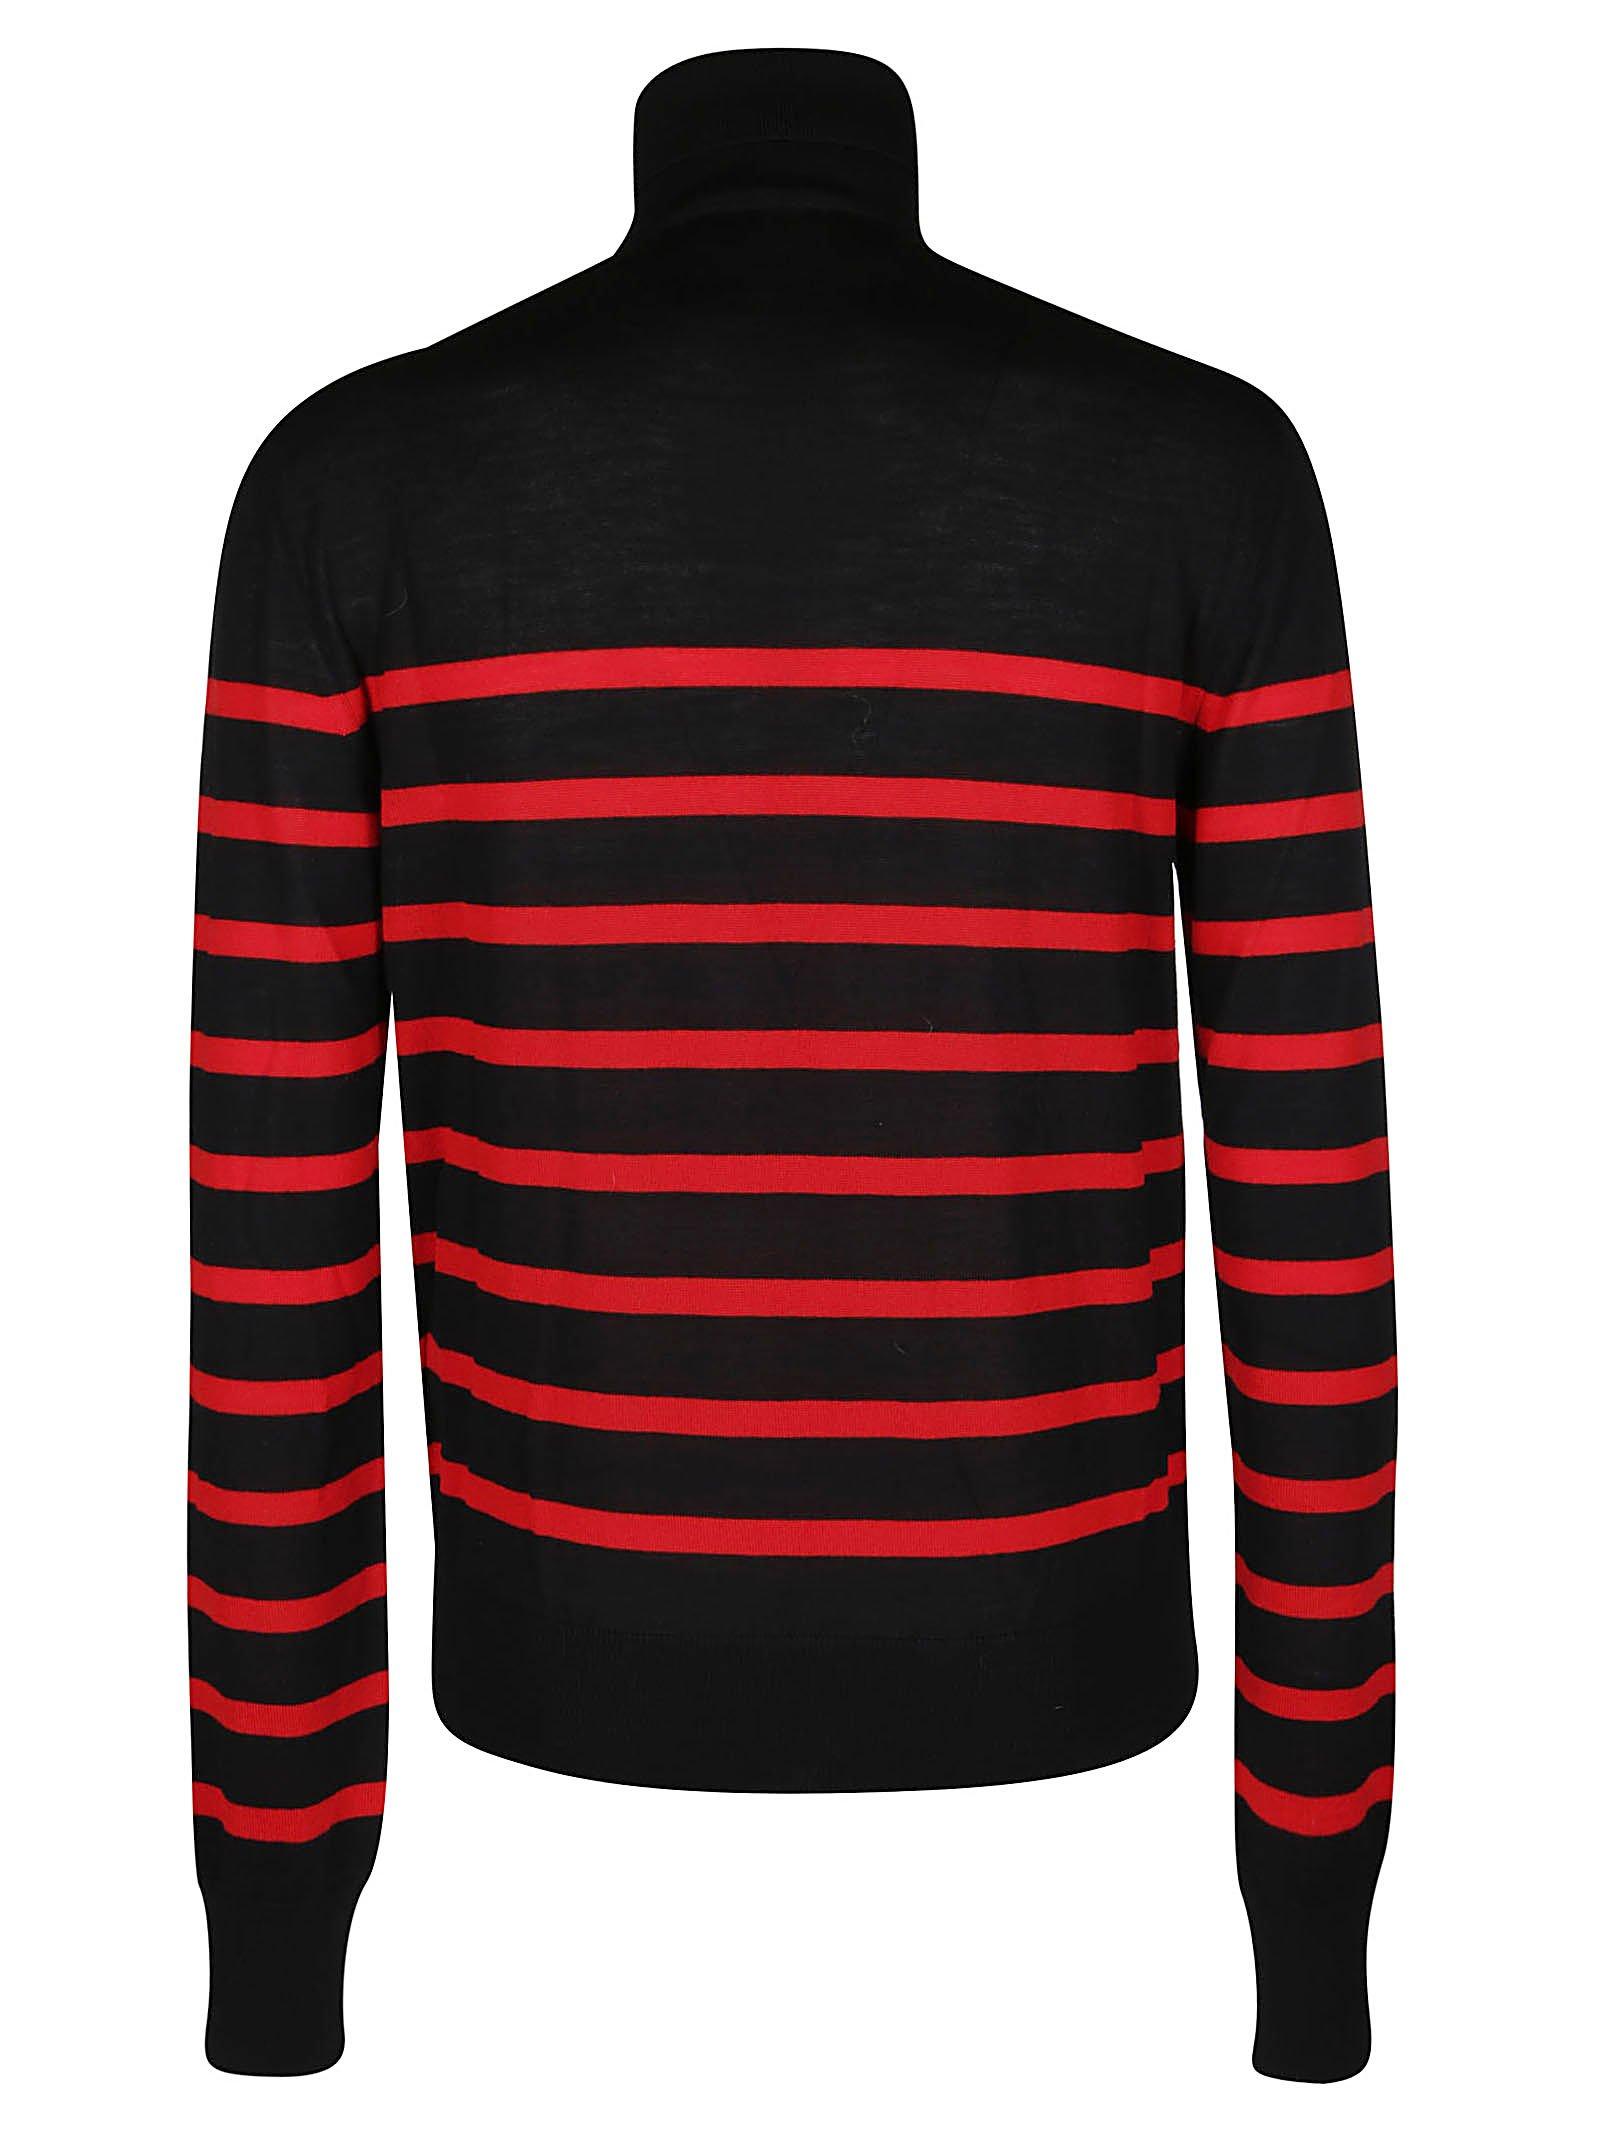 Balmain Wool Striped Turtleneck Sweater in Red for Men - Lyst